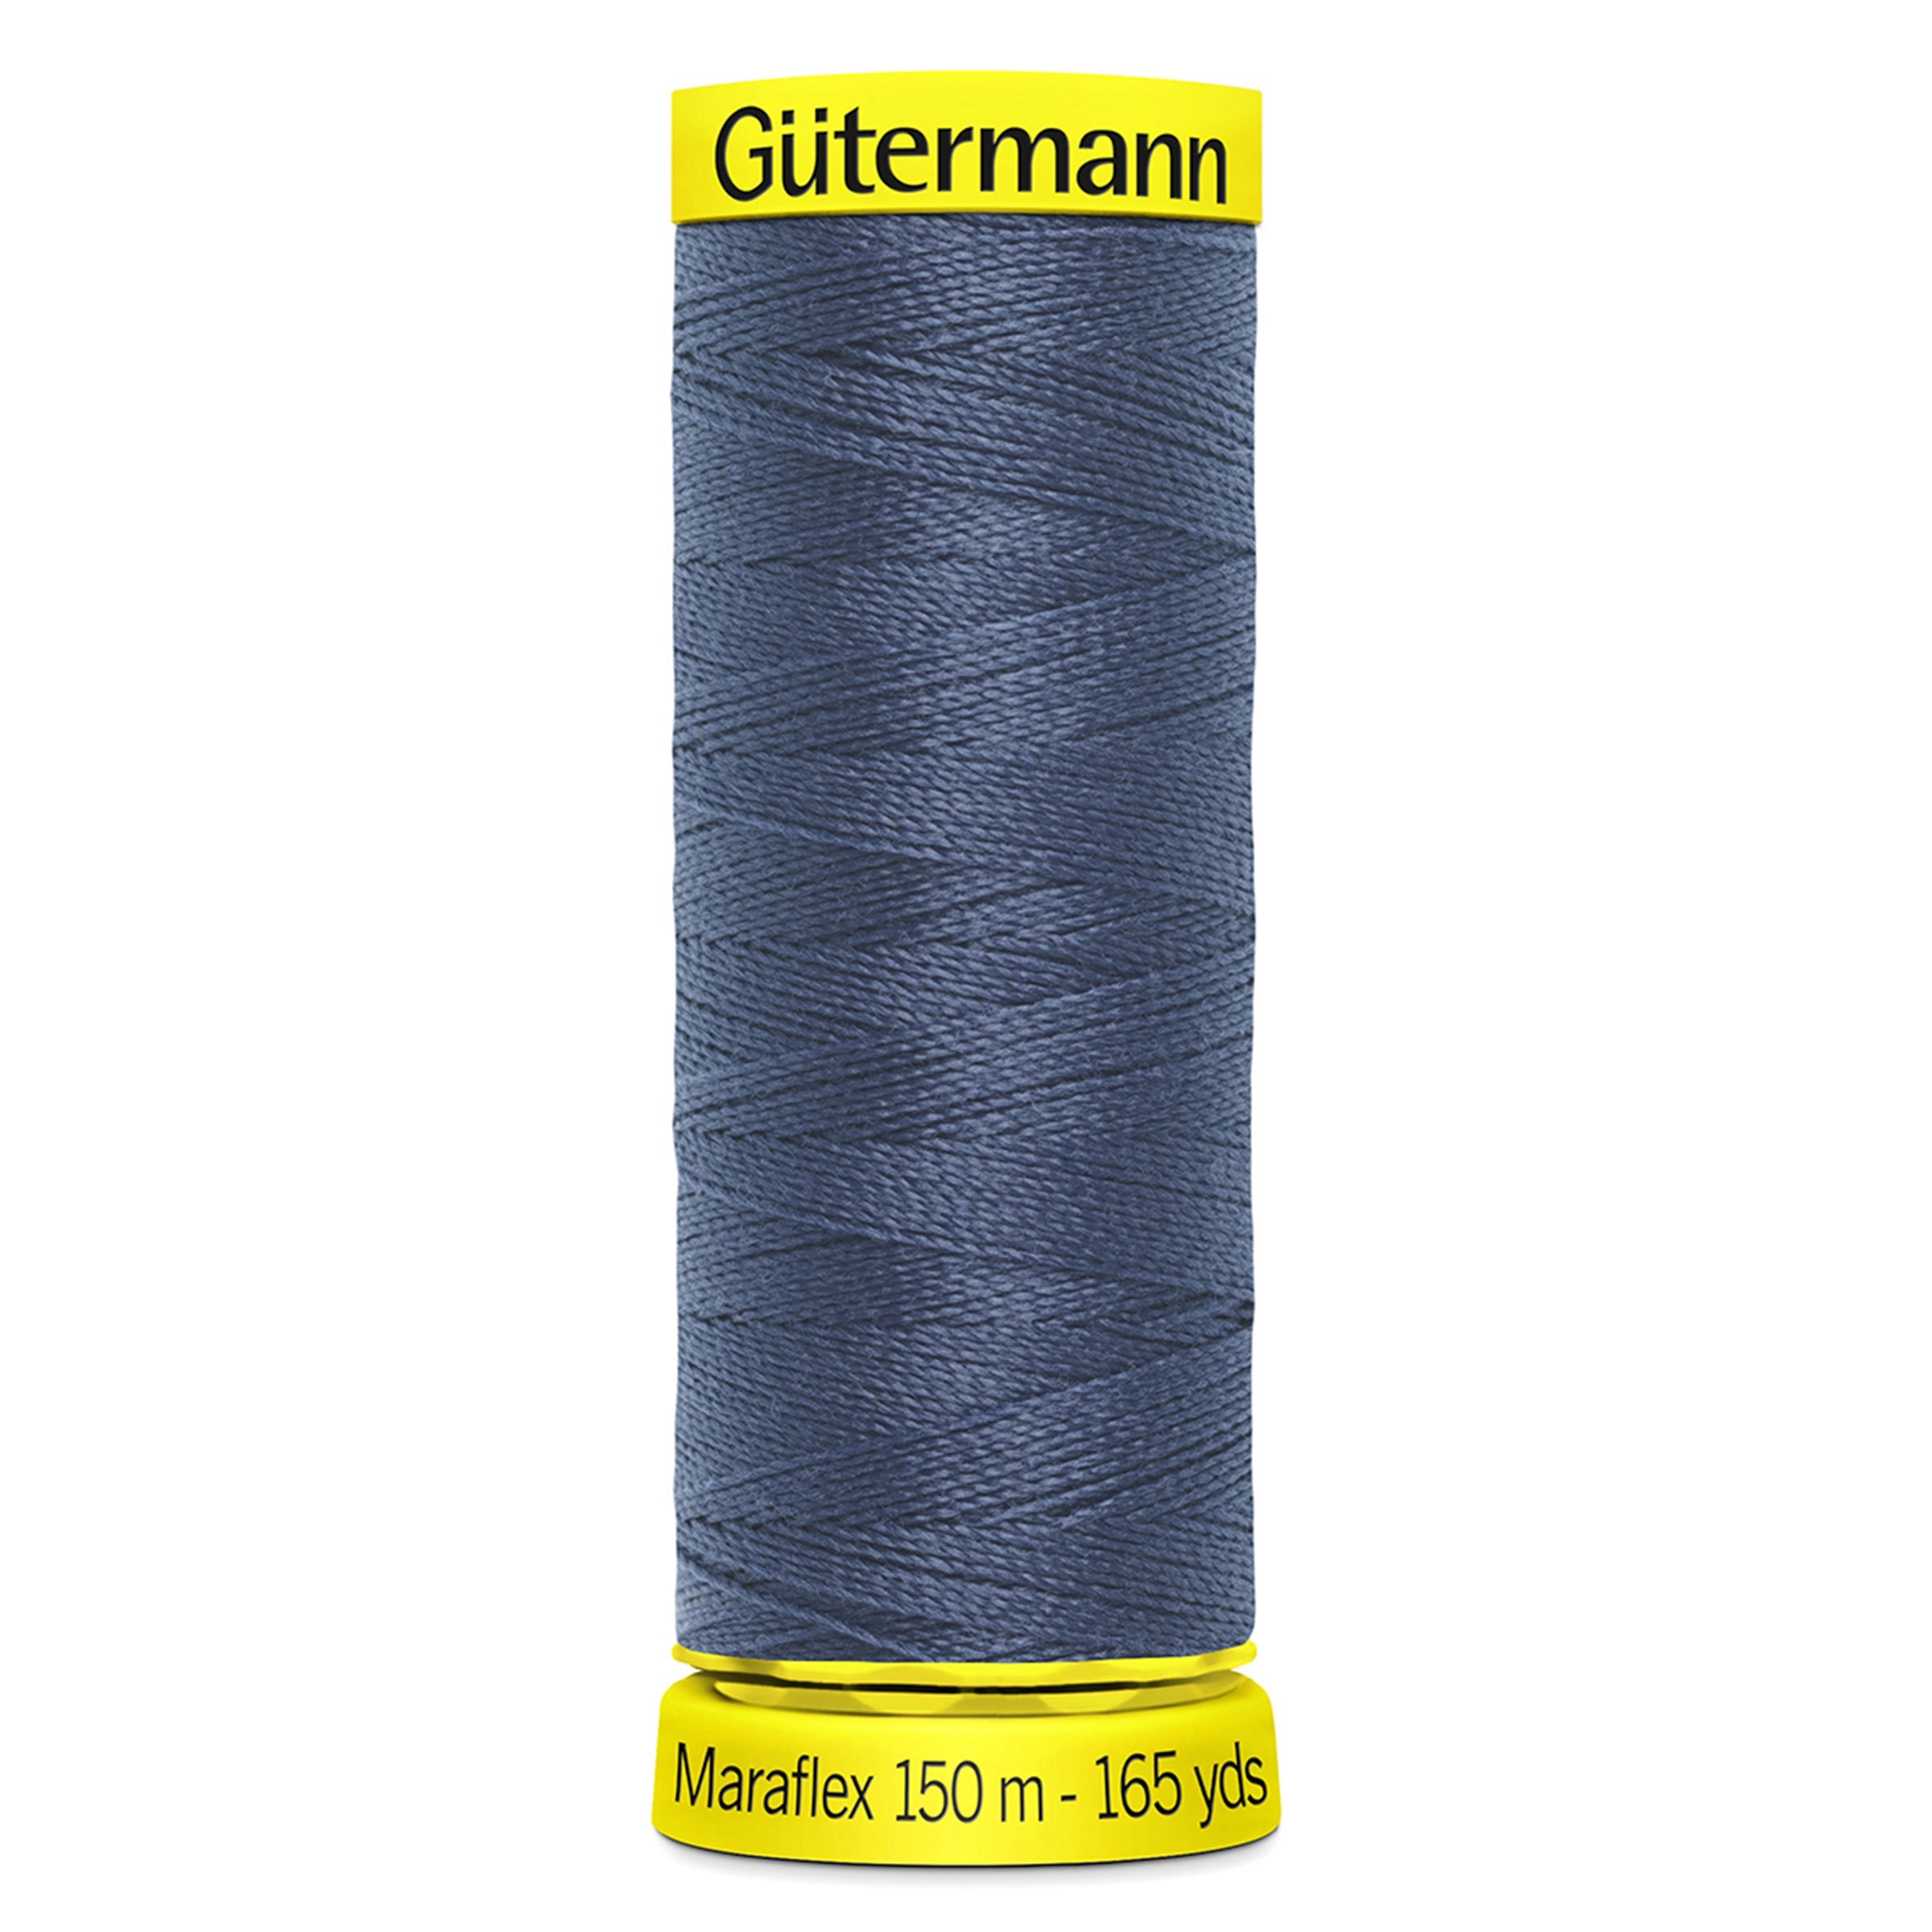 Gutermann Maraflex Stretchy Sewing Thread 150m colour 112 Blue grey from Jaycotts Sewing Supplies